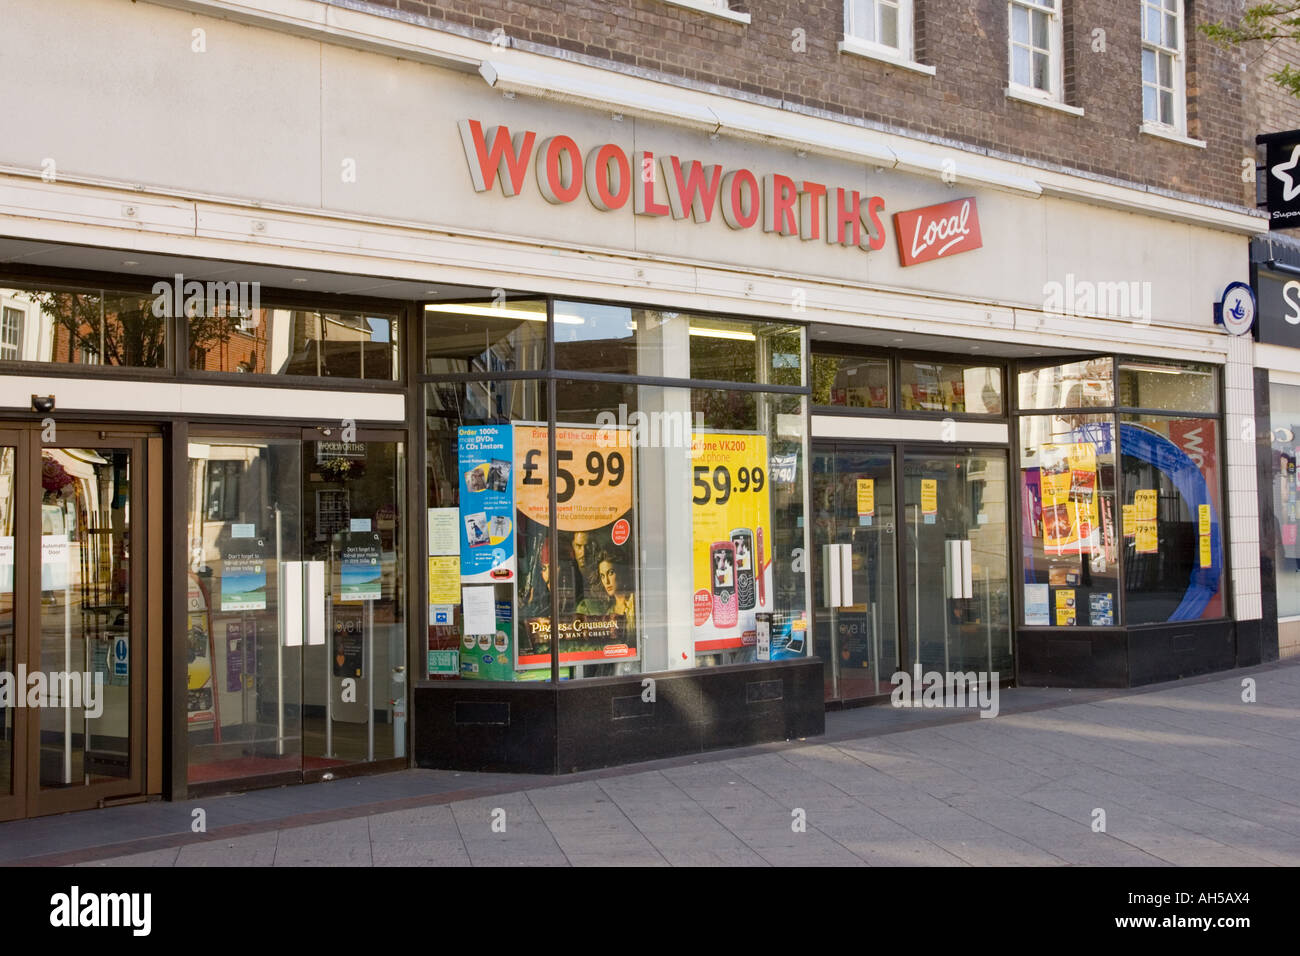 Woolworths shop in Stowmarket suffolk uk Stock Photo